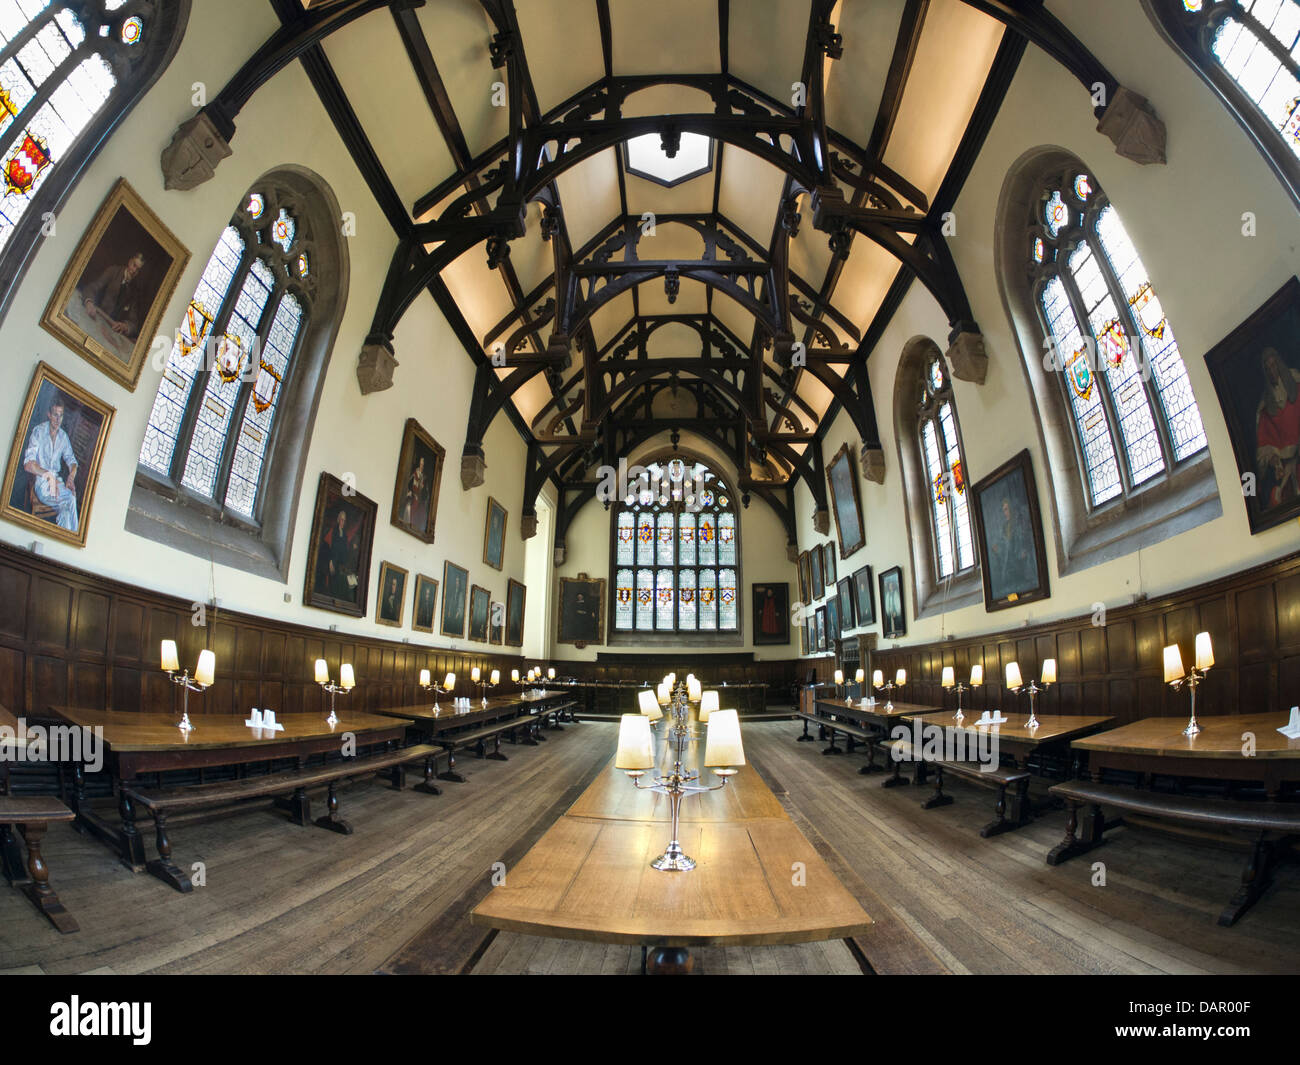 The Great Hall of Wadham College, Oxford - fisheye view Stock Photo